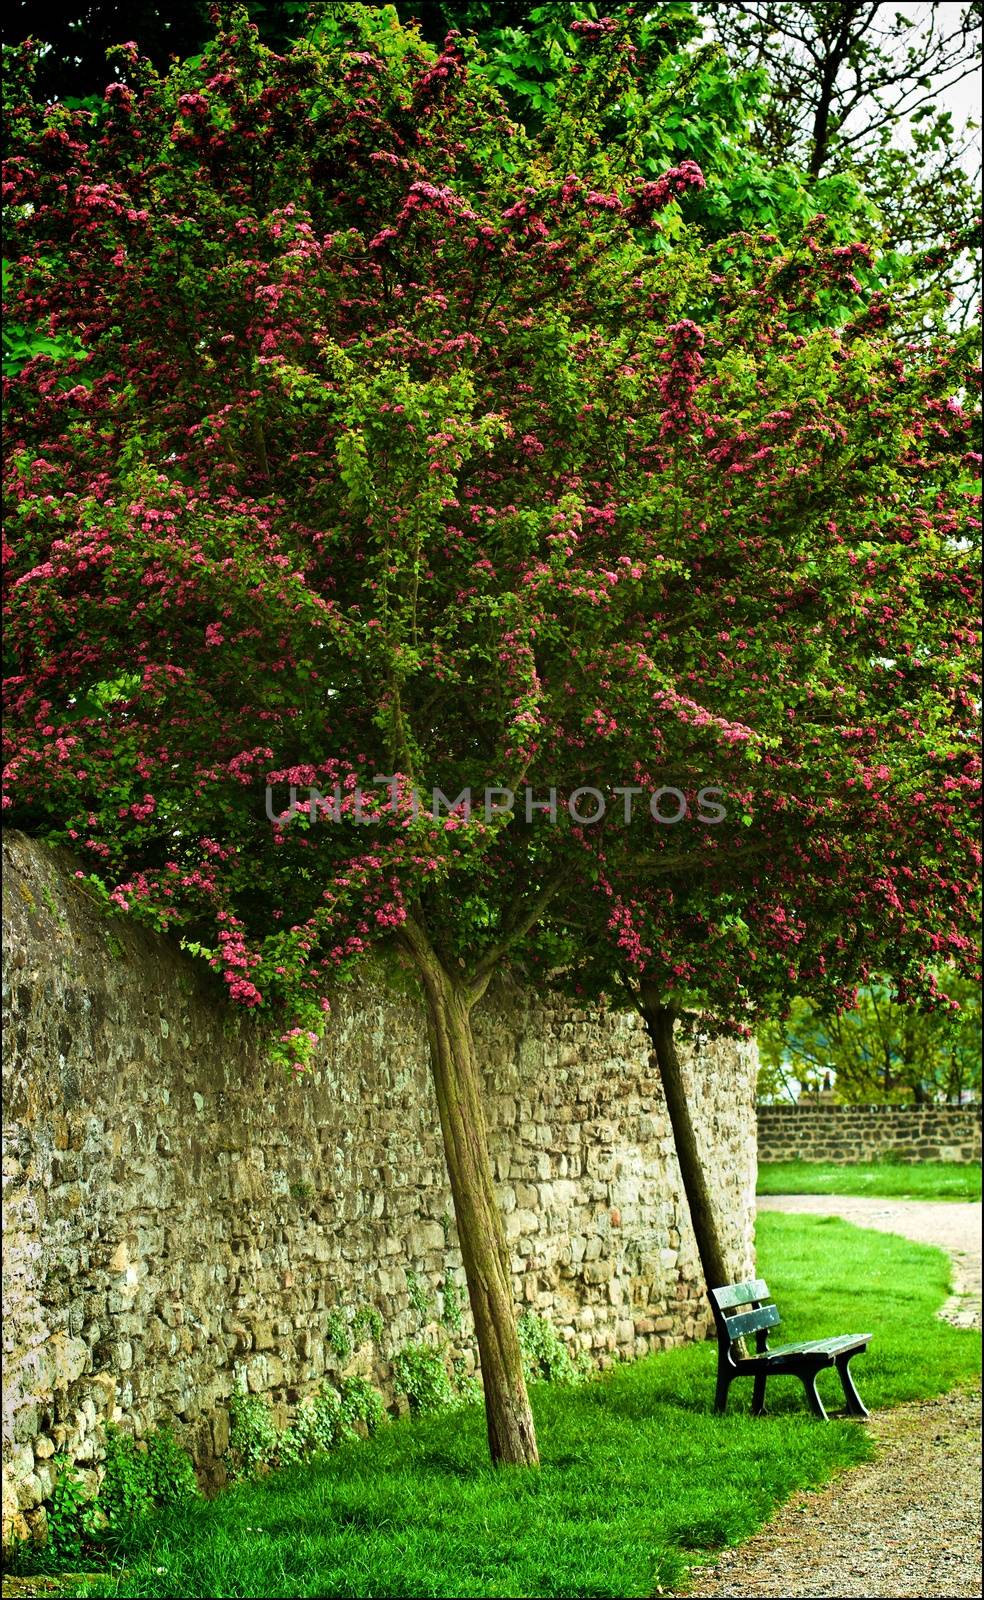 Bench under Flowering Tree by zhekos